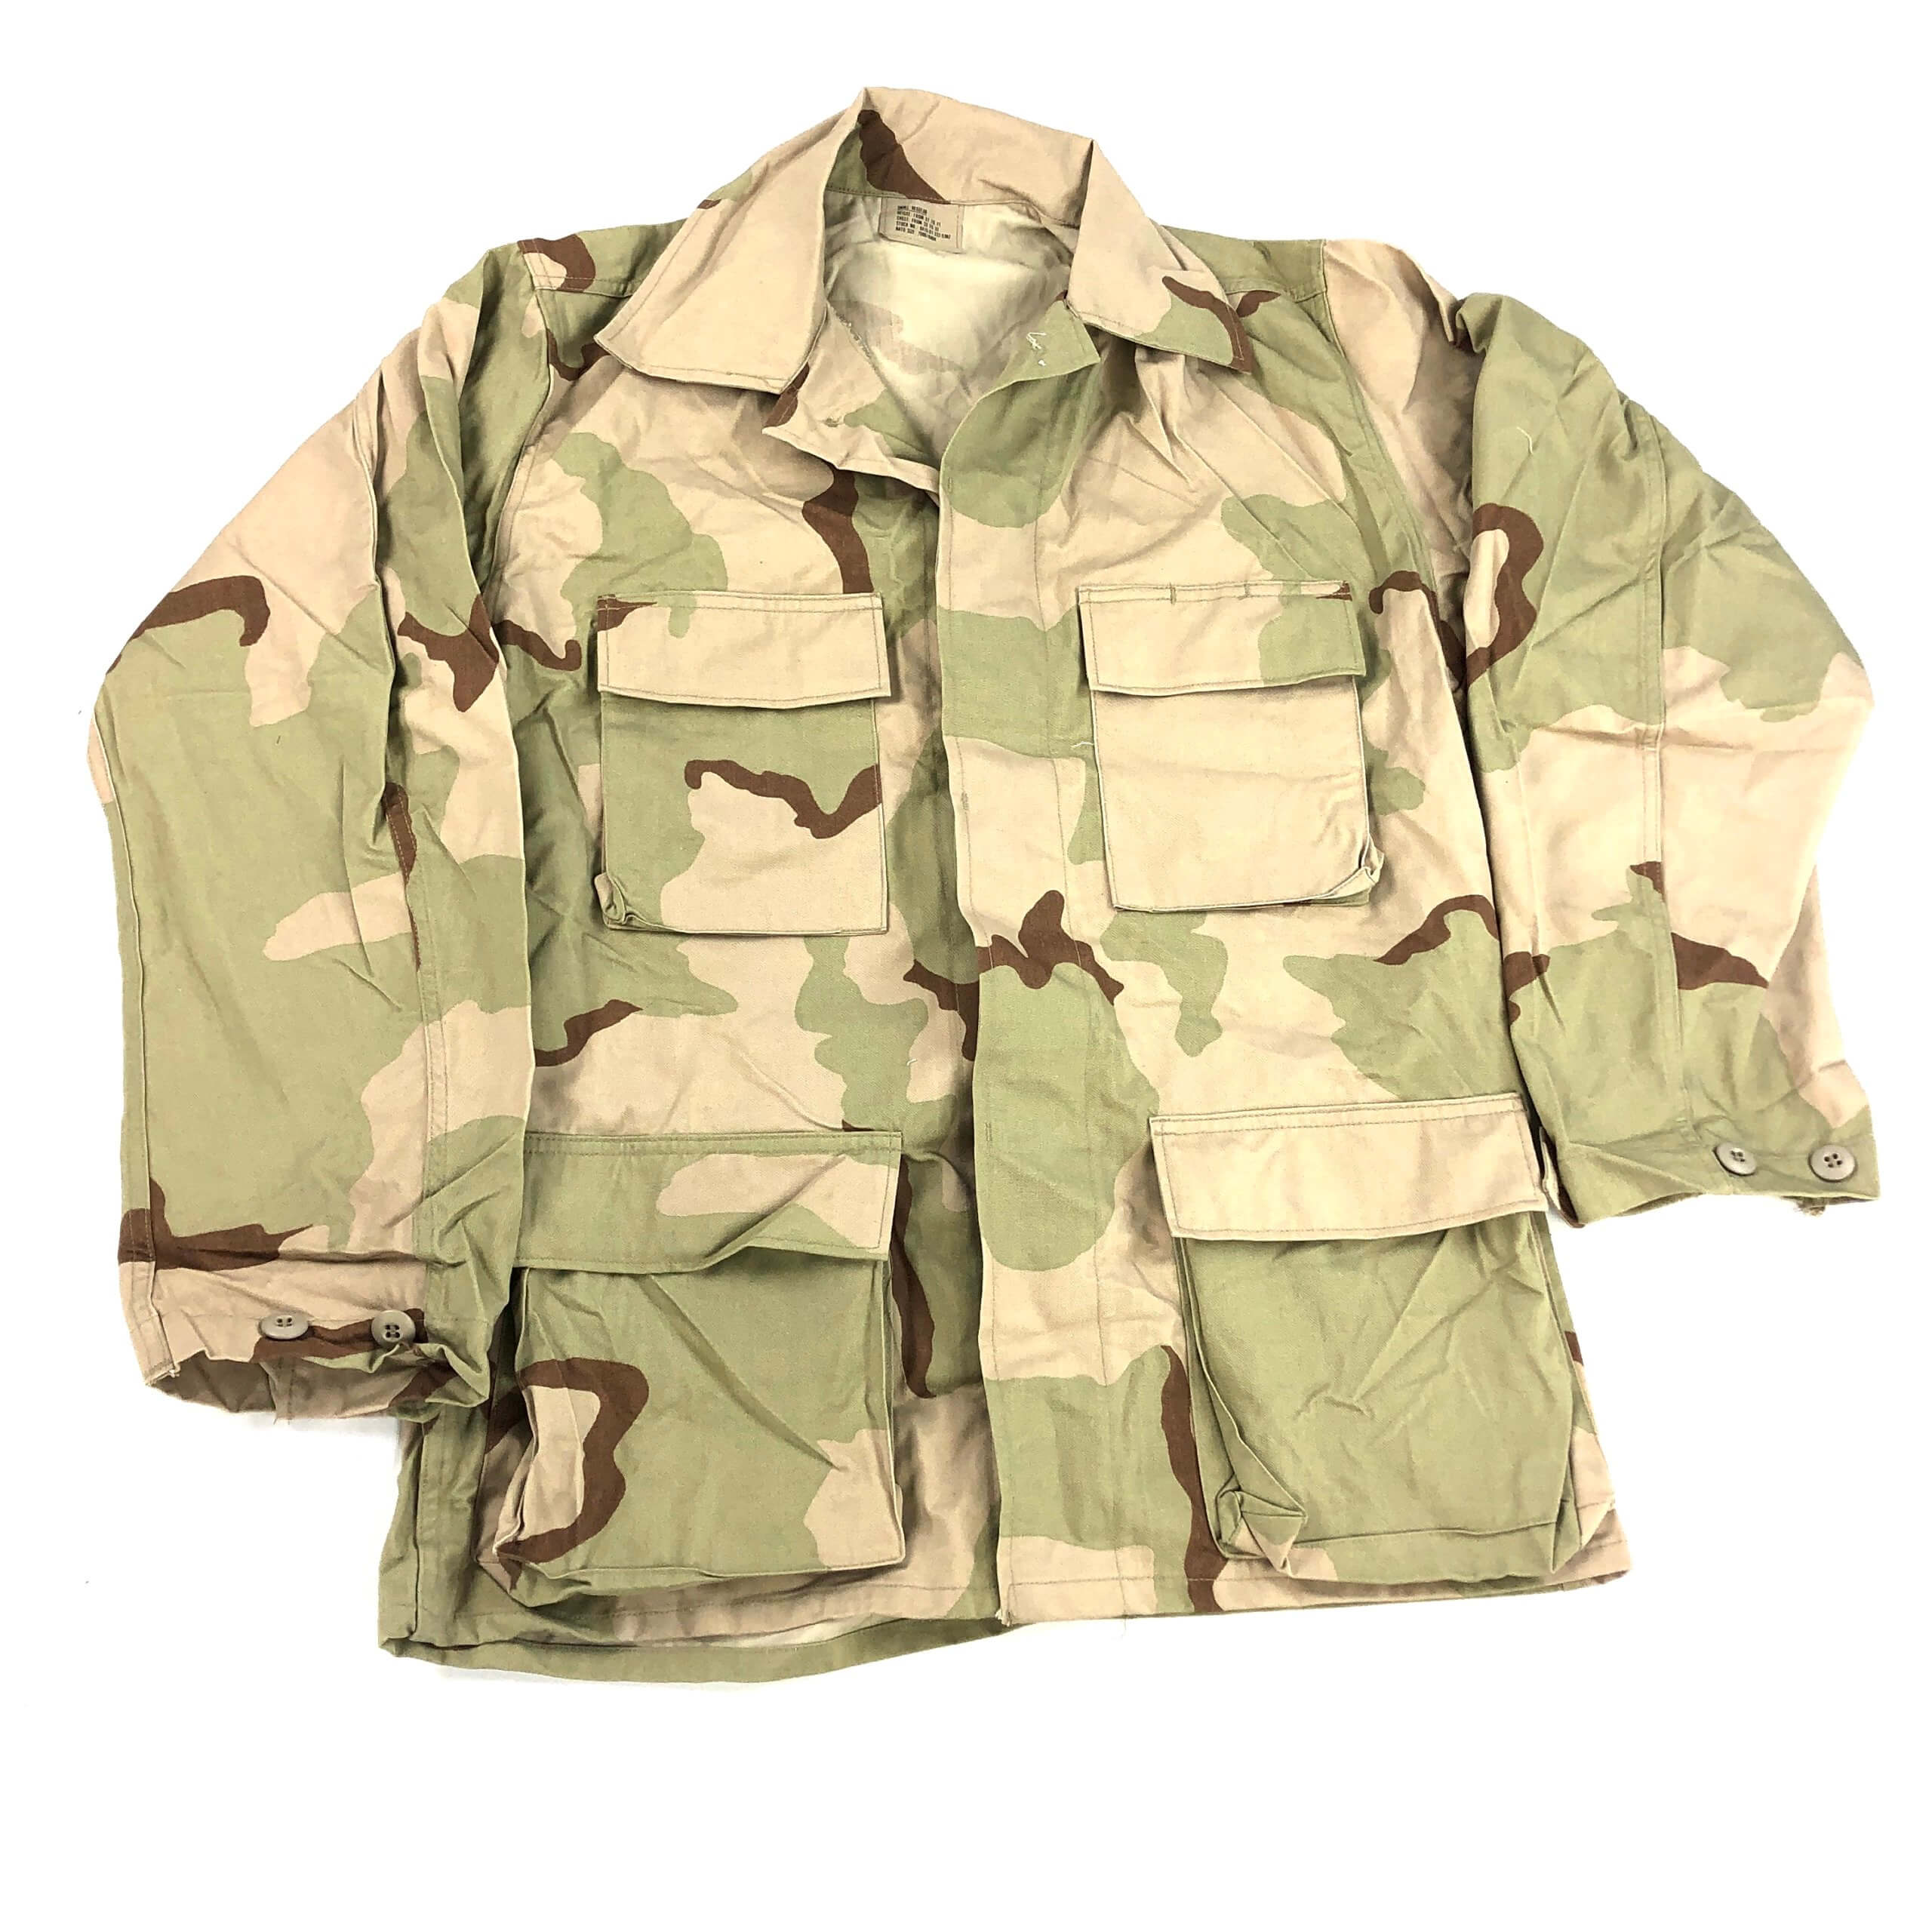 Size Large/Long US Army 3-Color Desert Camouflage Uniform BDU Coat or Shirt 